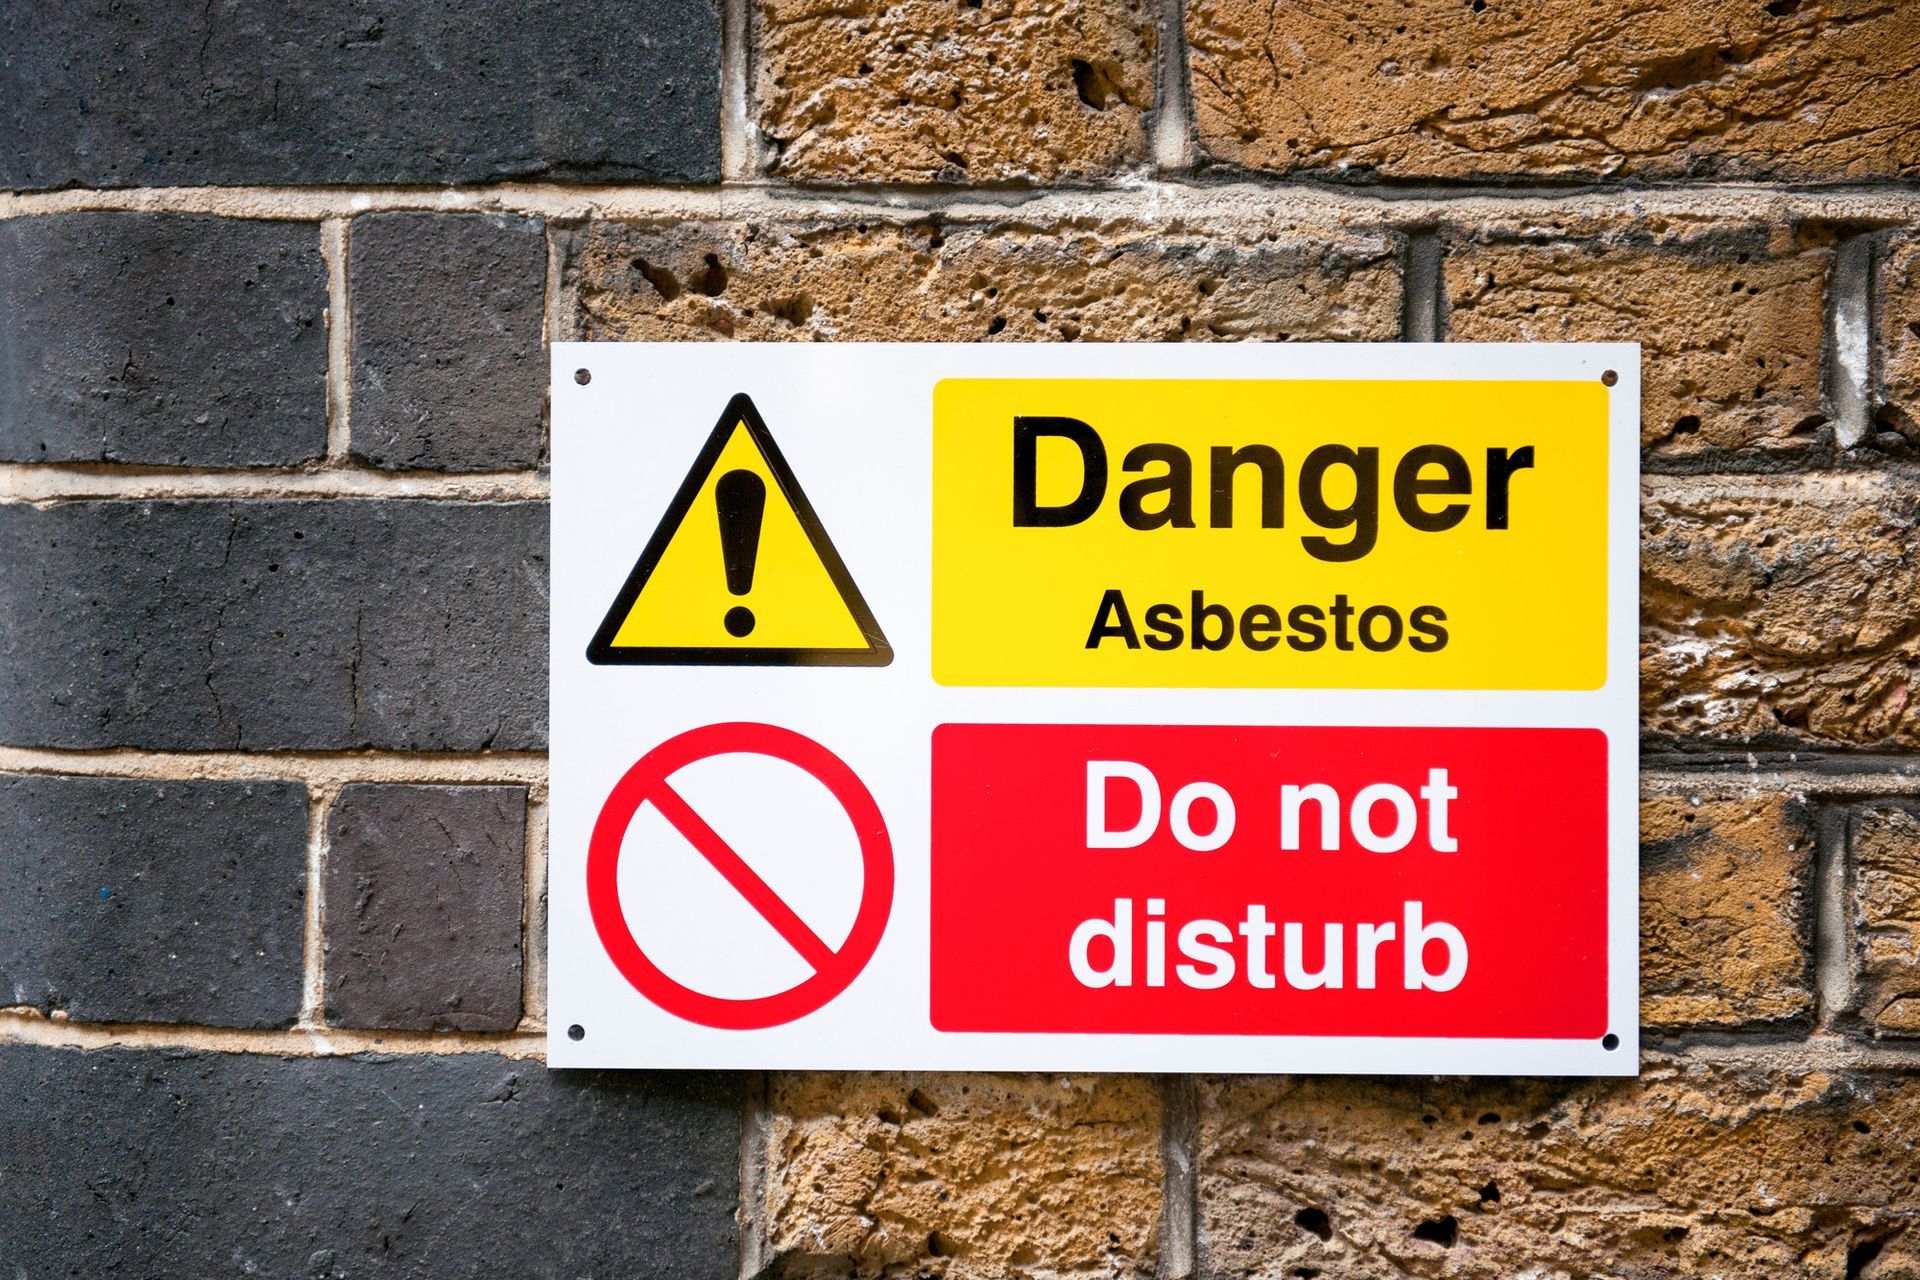 Danger asbestos sign